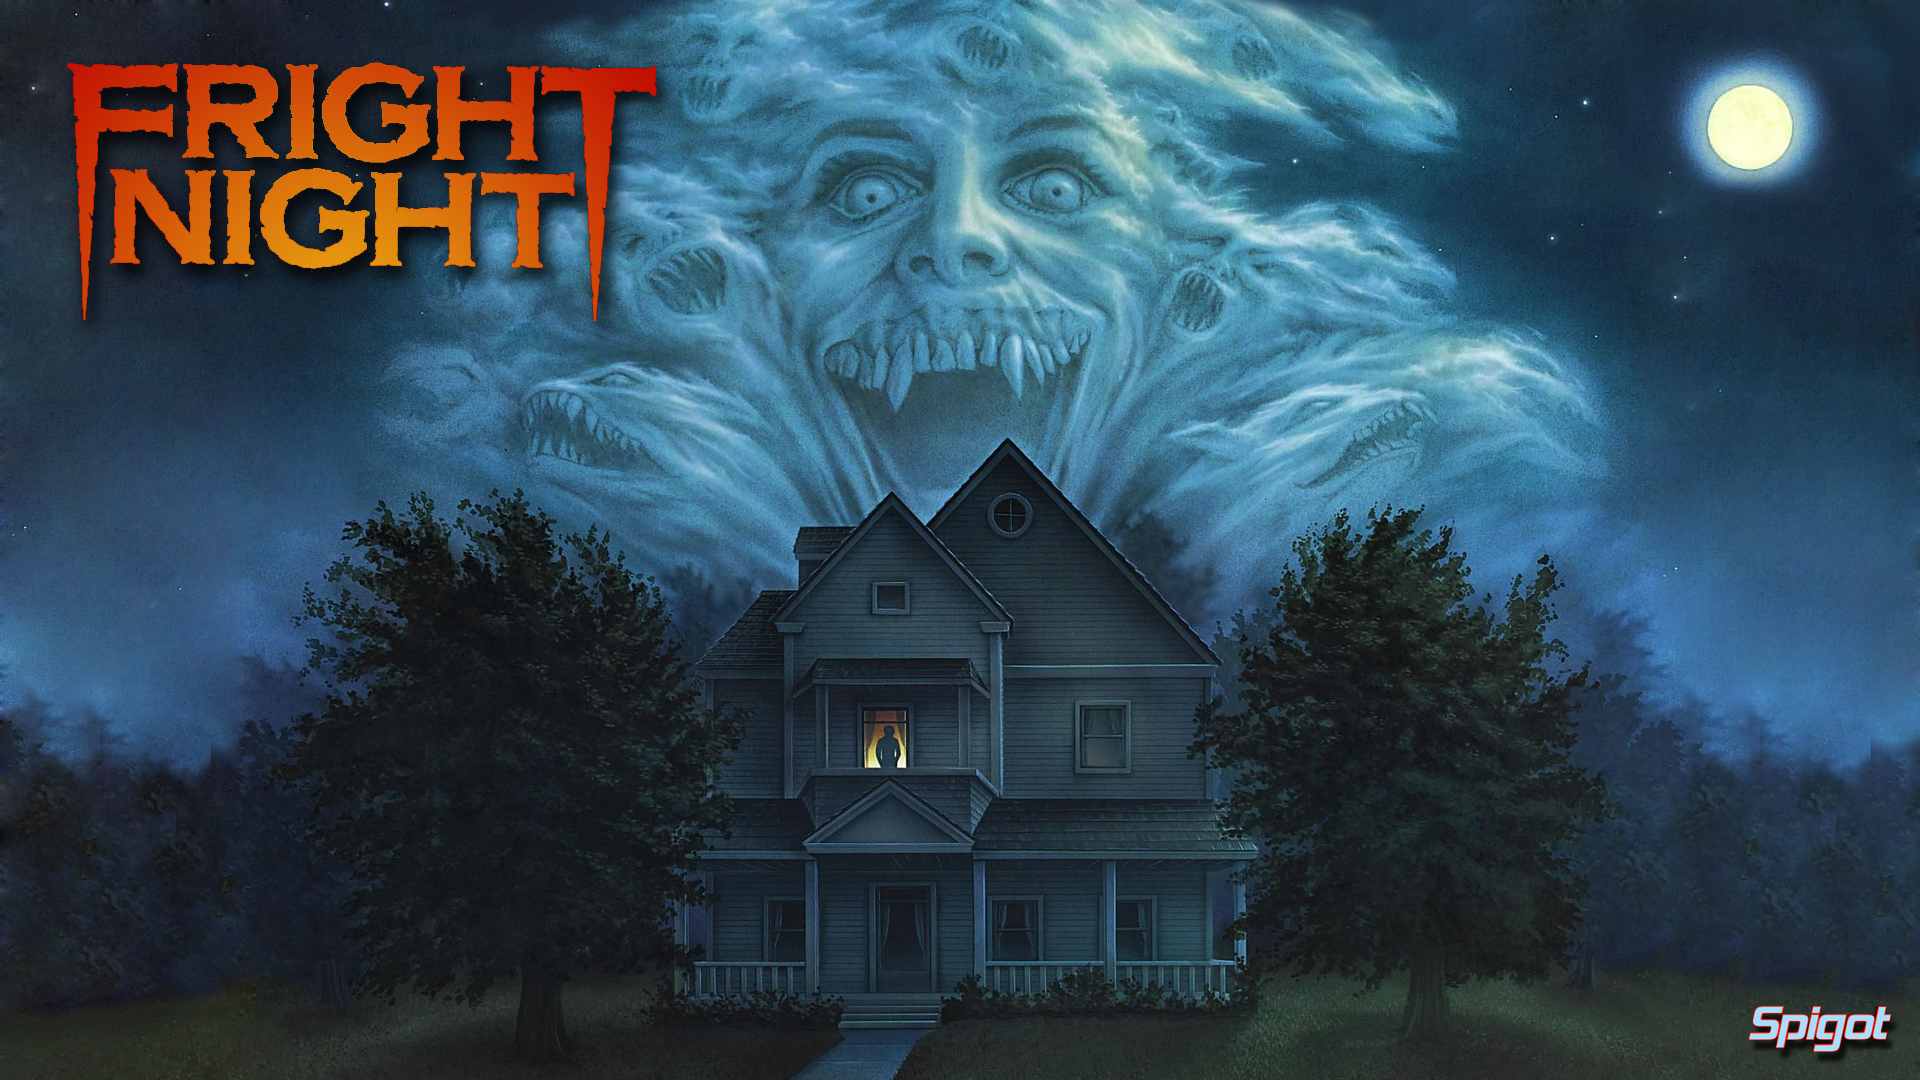 Fright Night Gee Spigot S